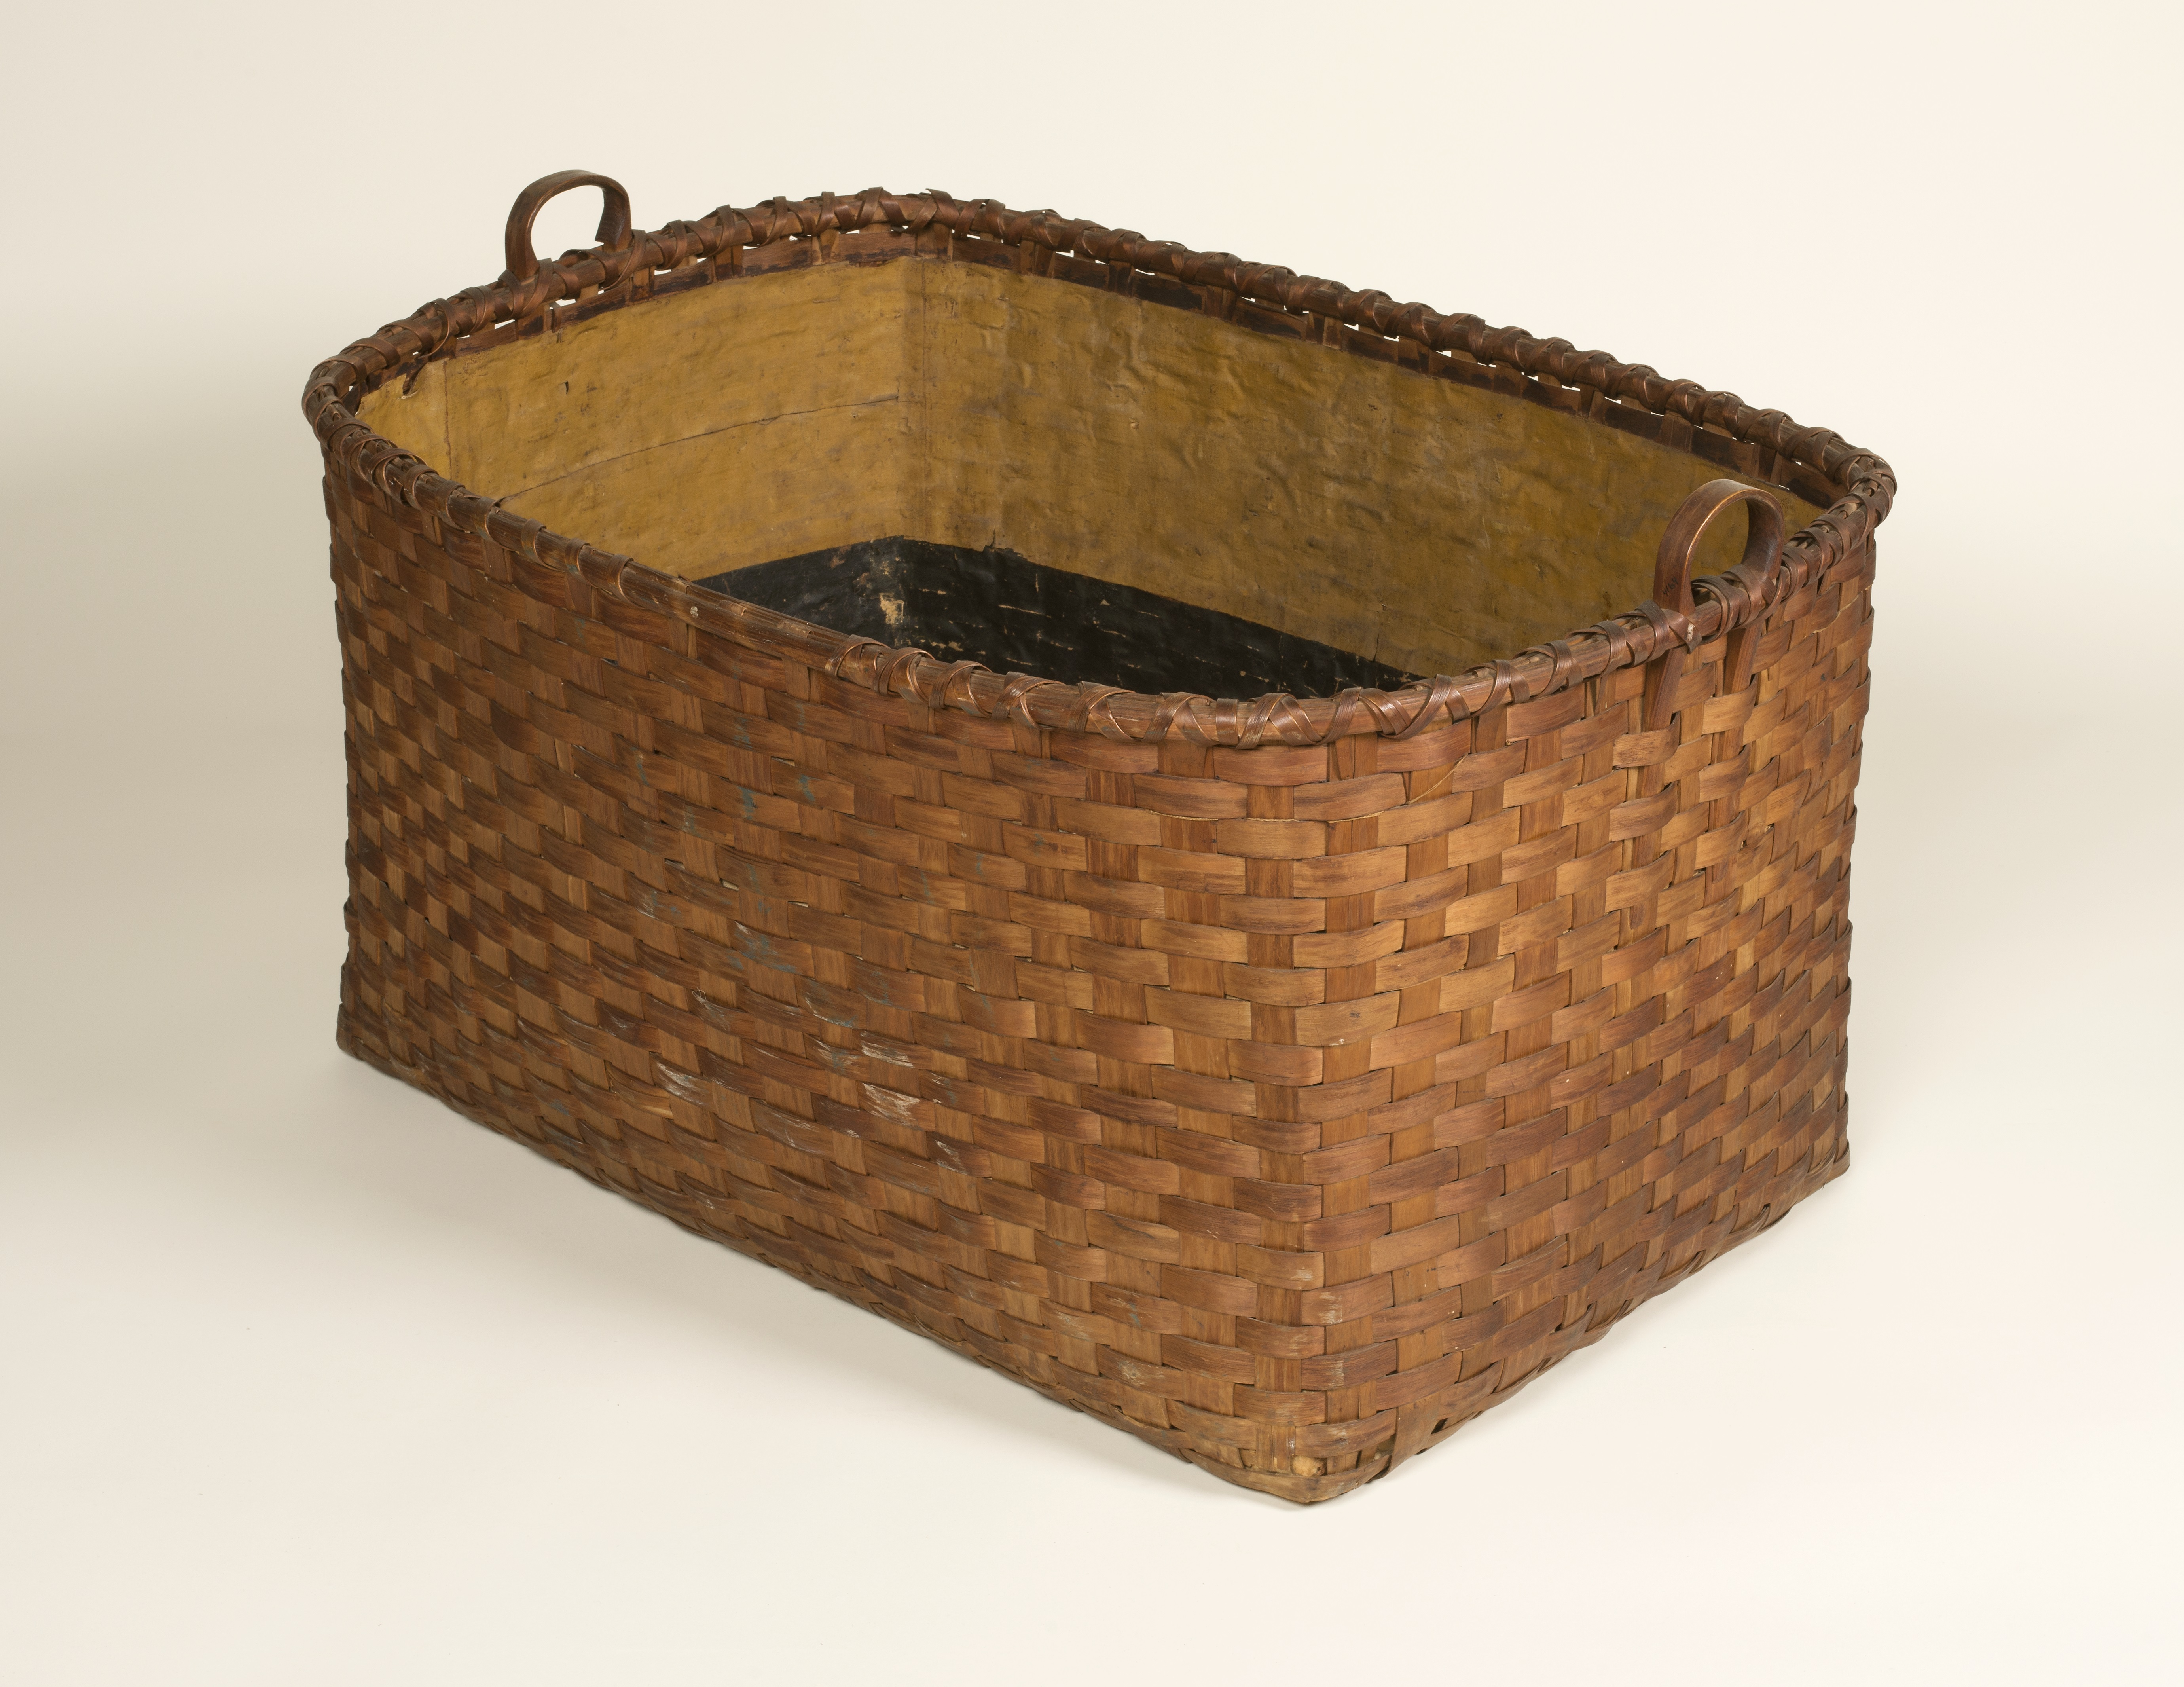 A wicker basket on a white background.